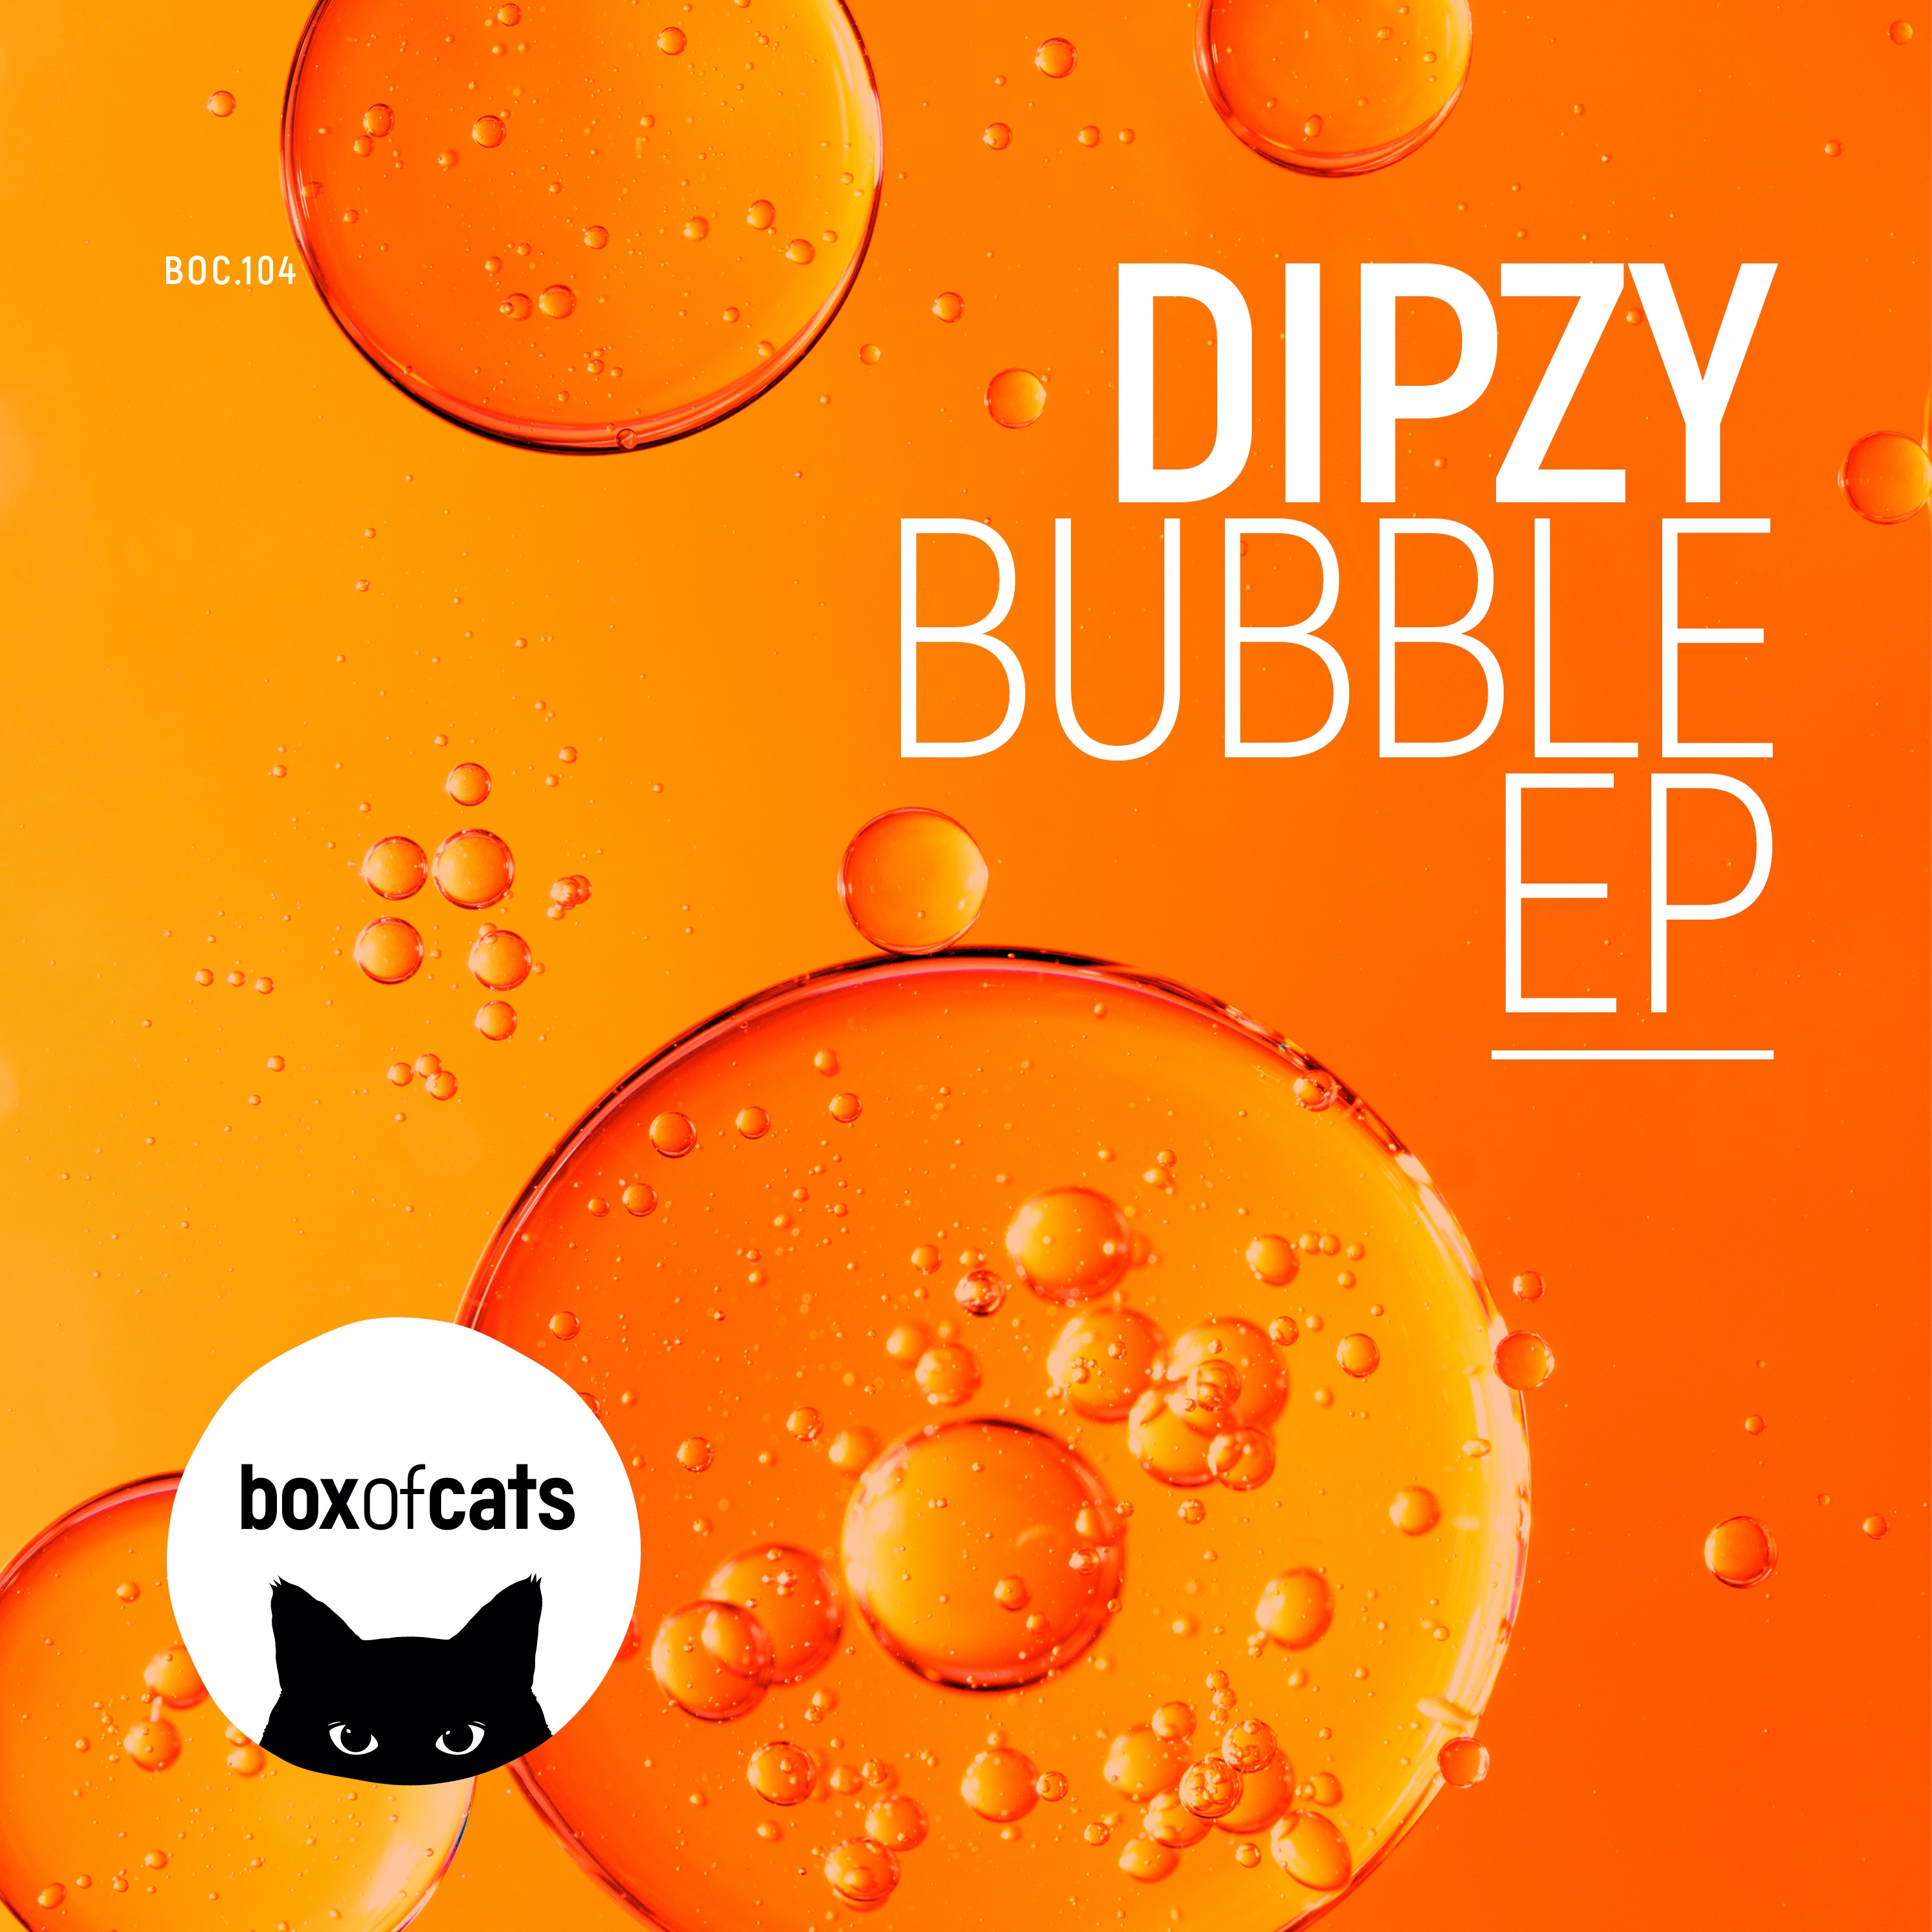 Descarregar Dipzy - Bubble (BOC104)